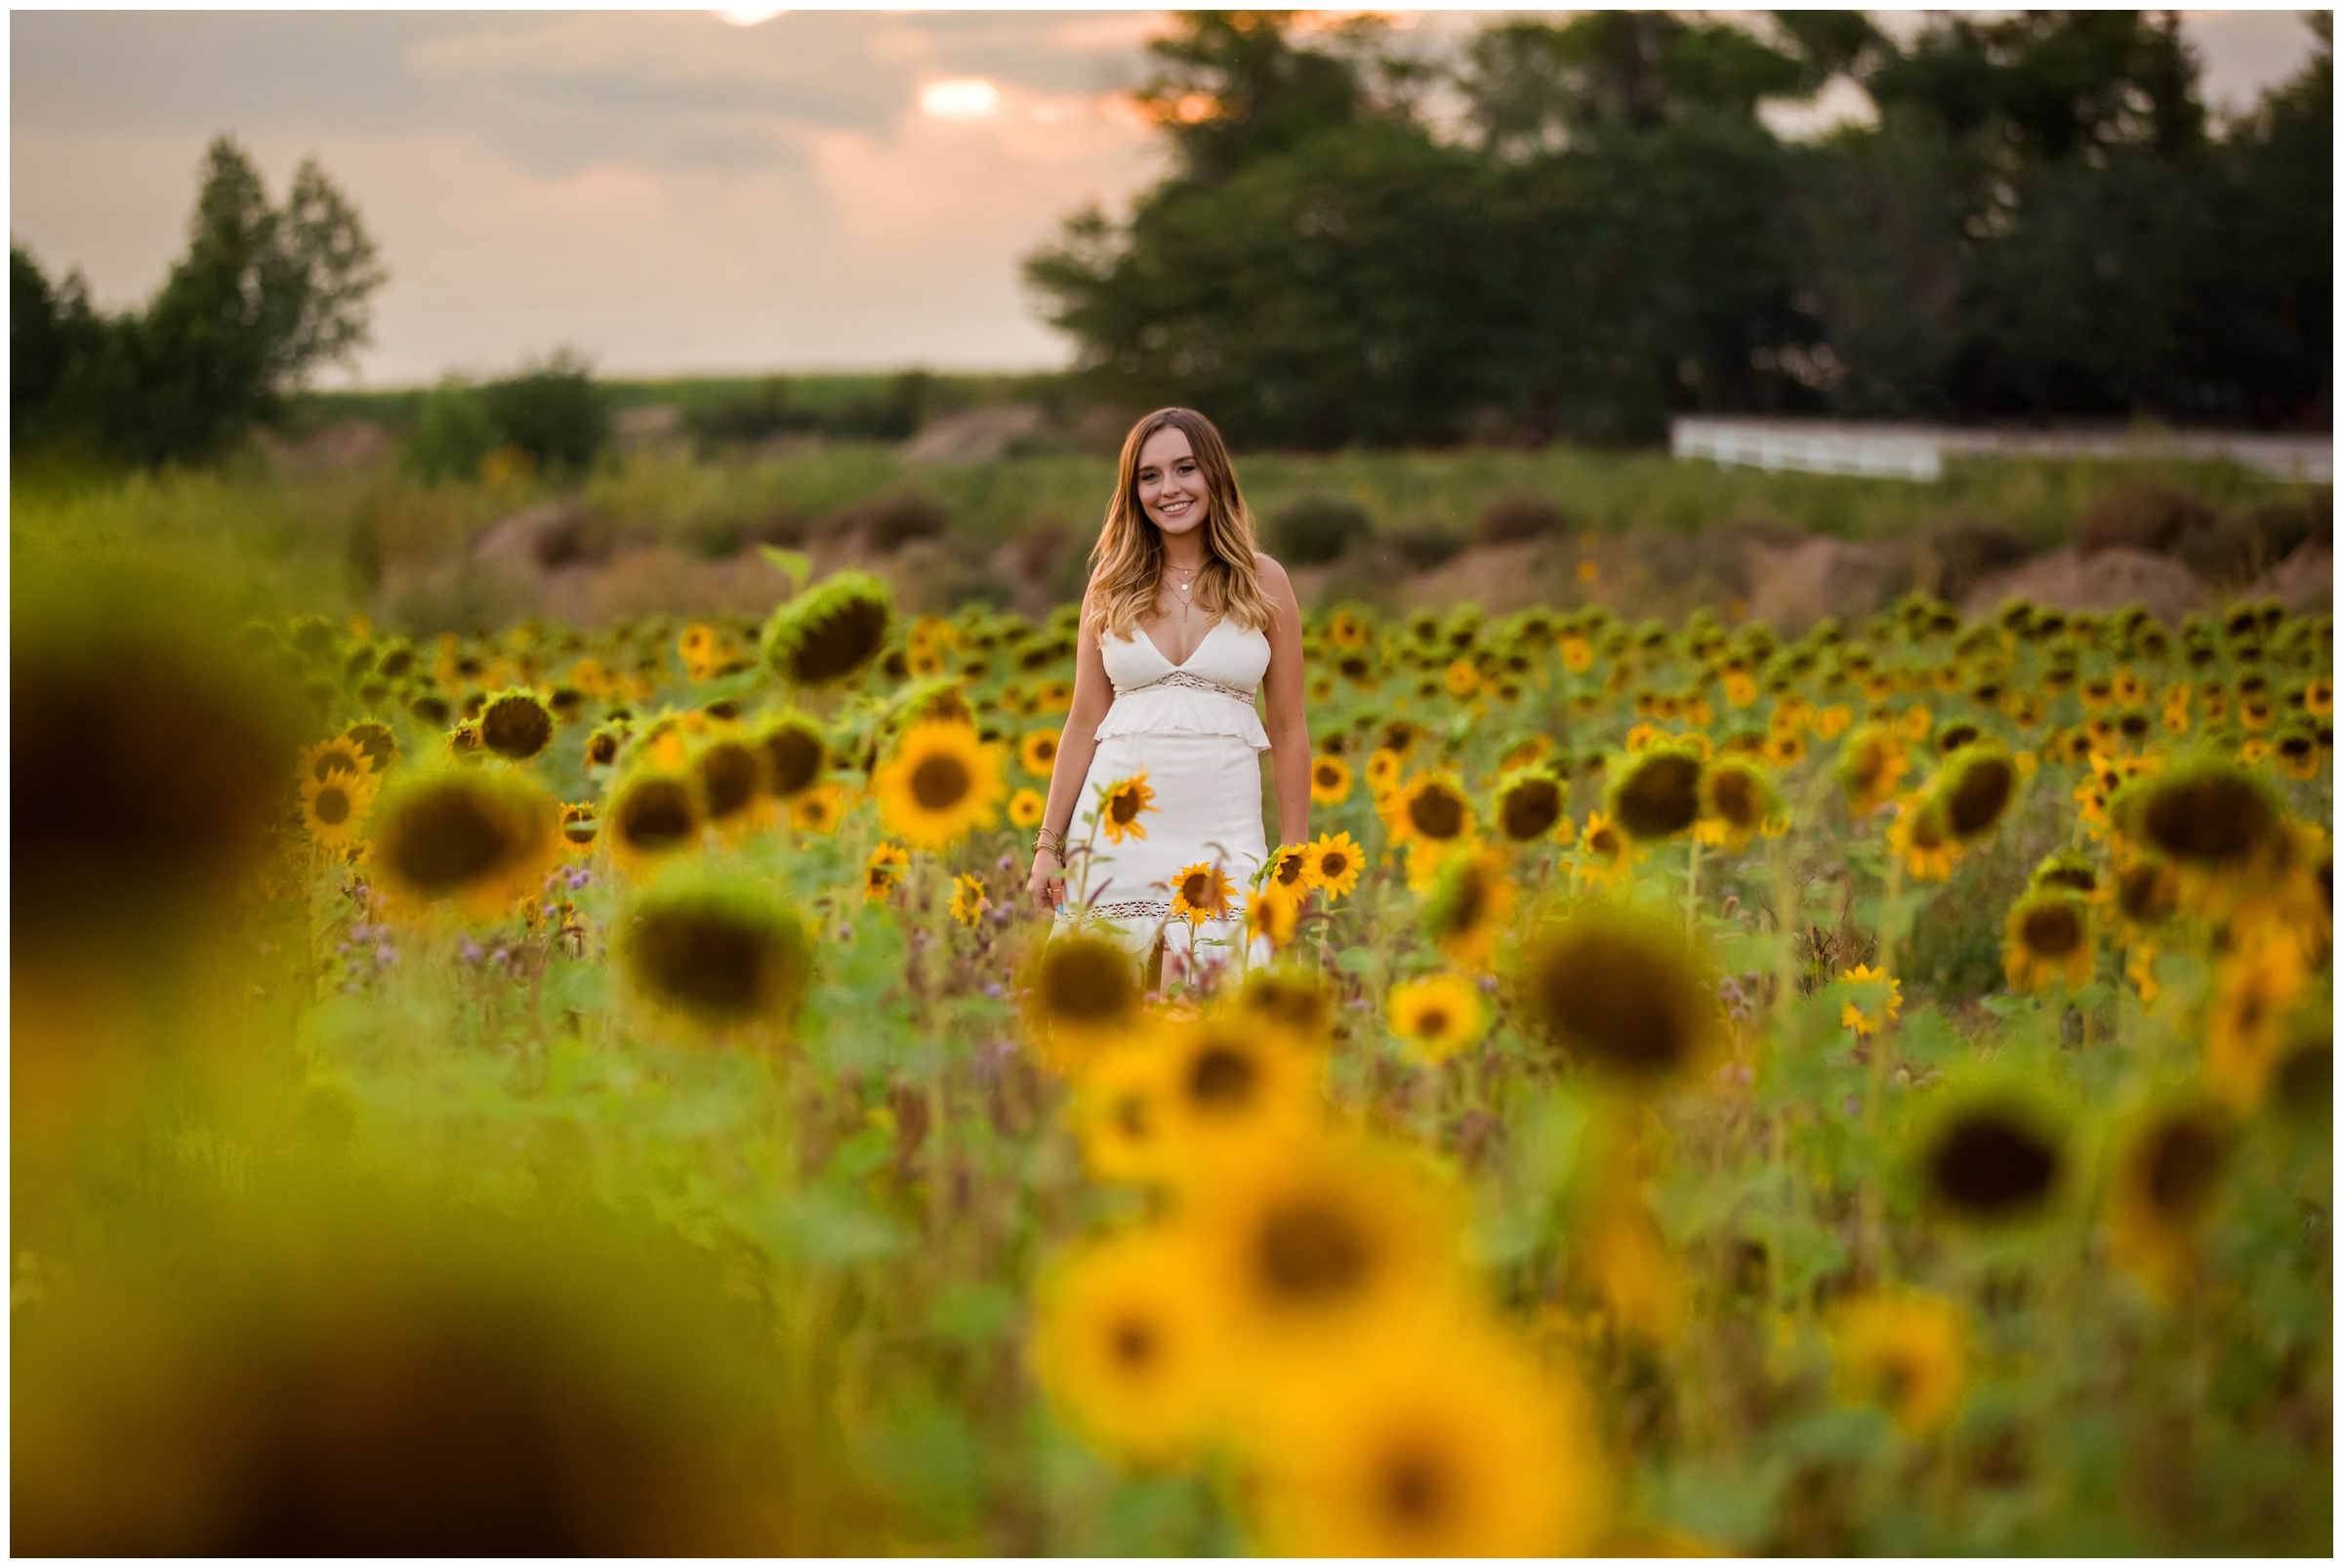 Berthoud senior photos in sunflower field by Colorado portrait photographer Plum pretty photography 